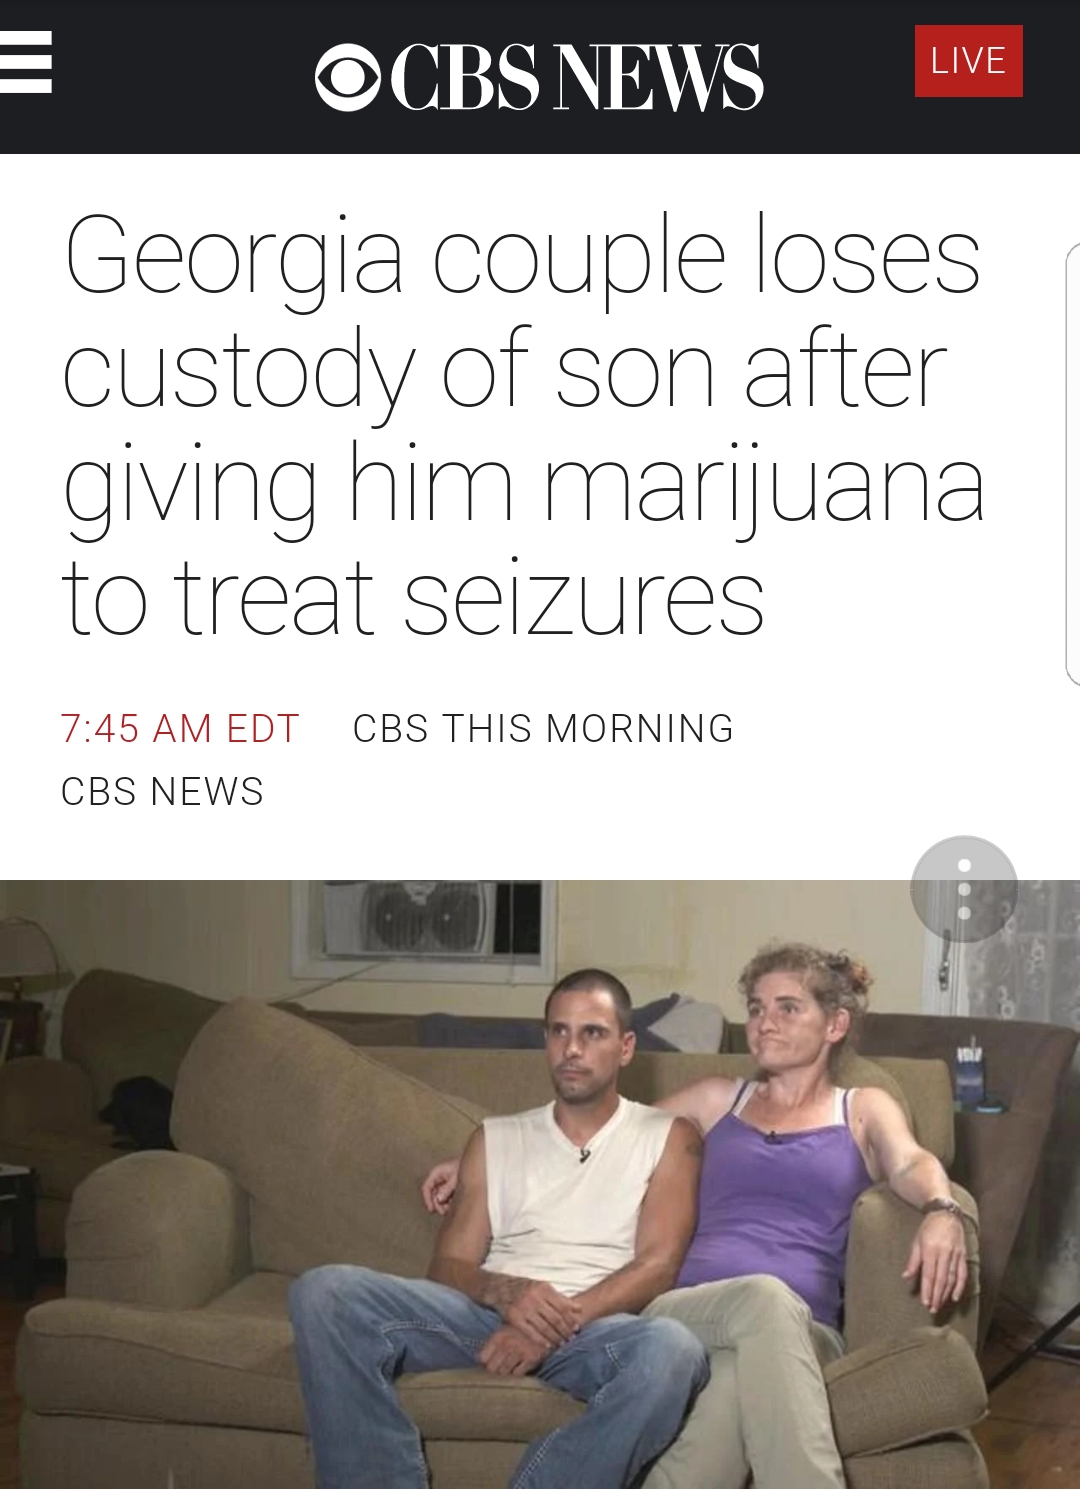 cbs - Ocbs News Live Georgia couple loses custody of son after giving him marijuana to treat seizures Edt Cbs This Morning Cbs News